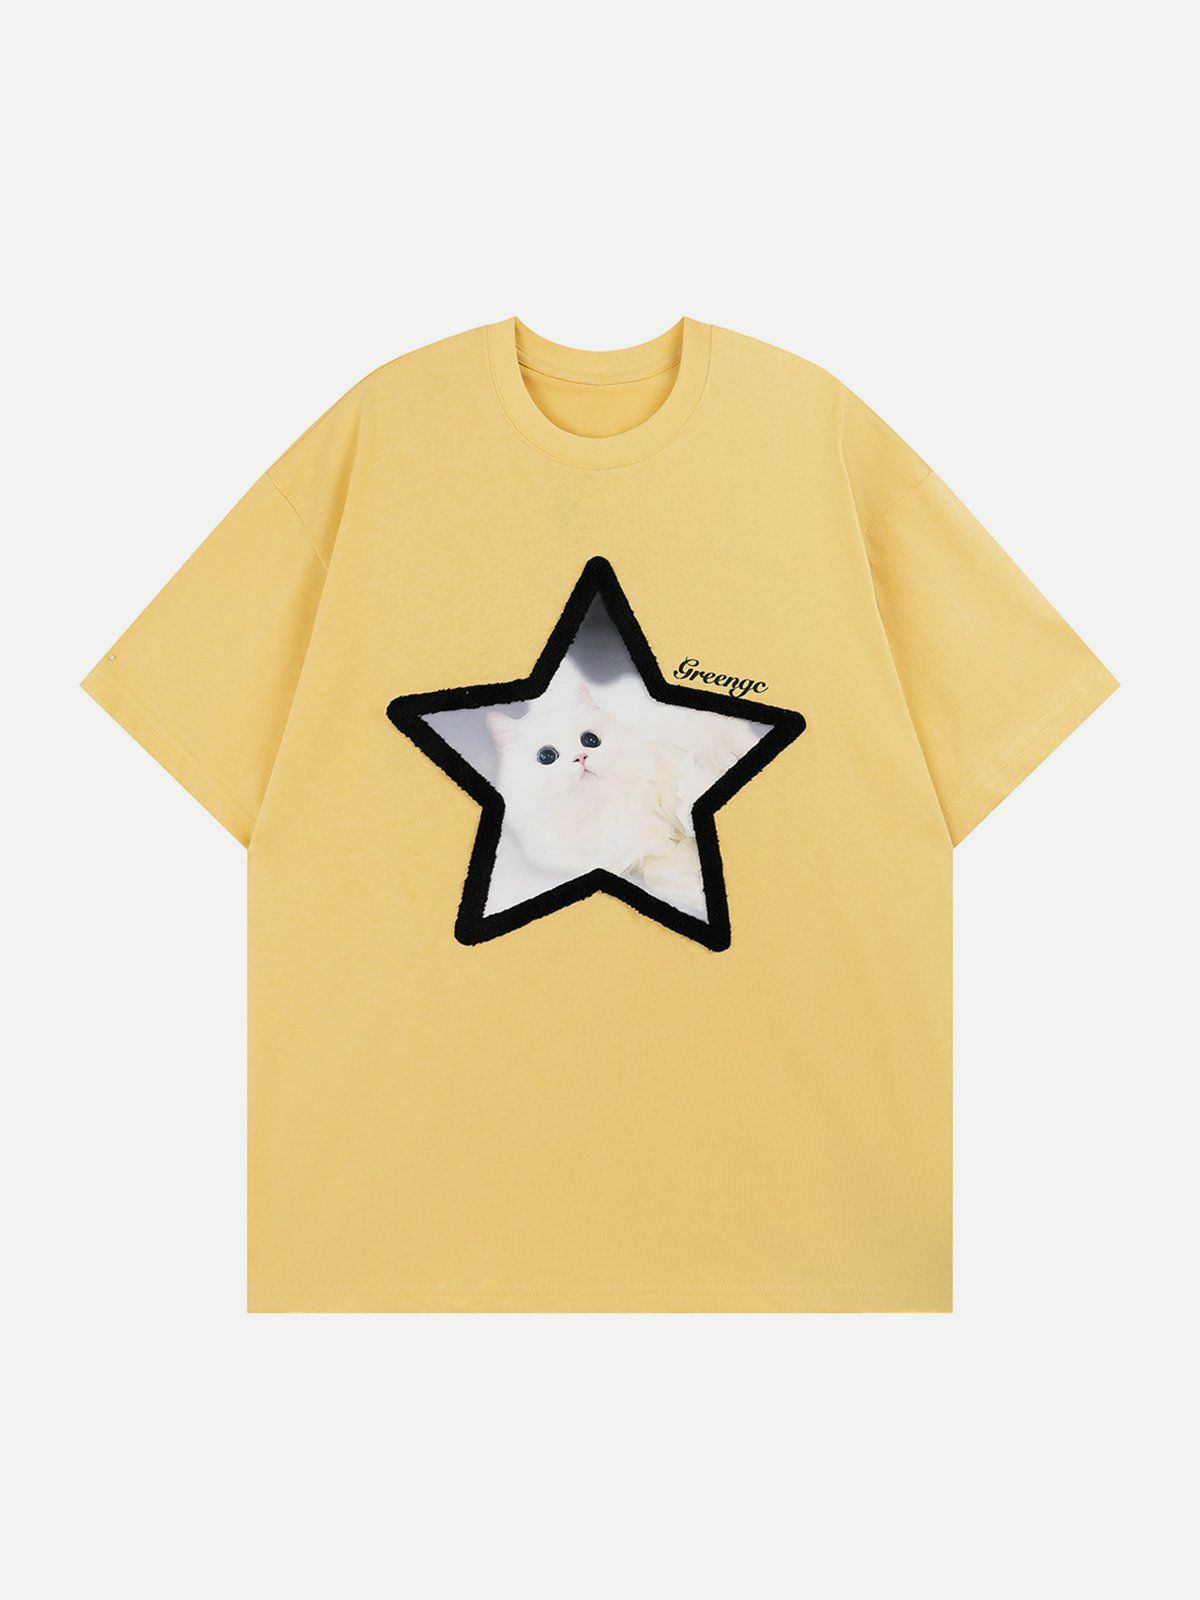 vibrant star cat tee edgy  retro urban streetwear 2079